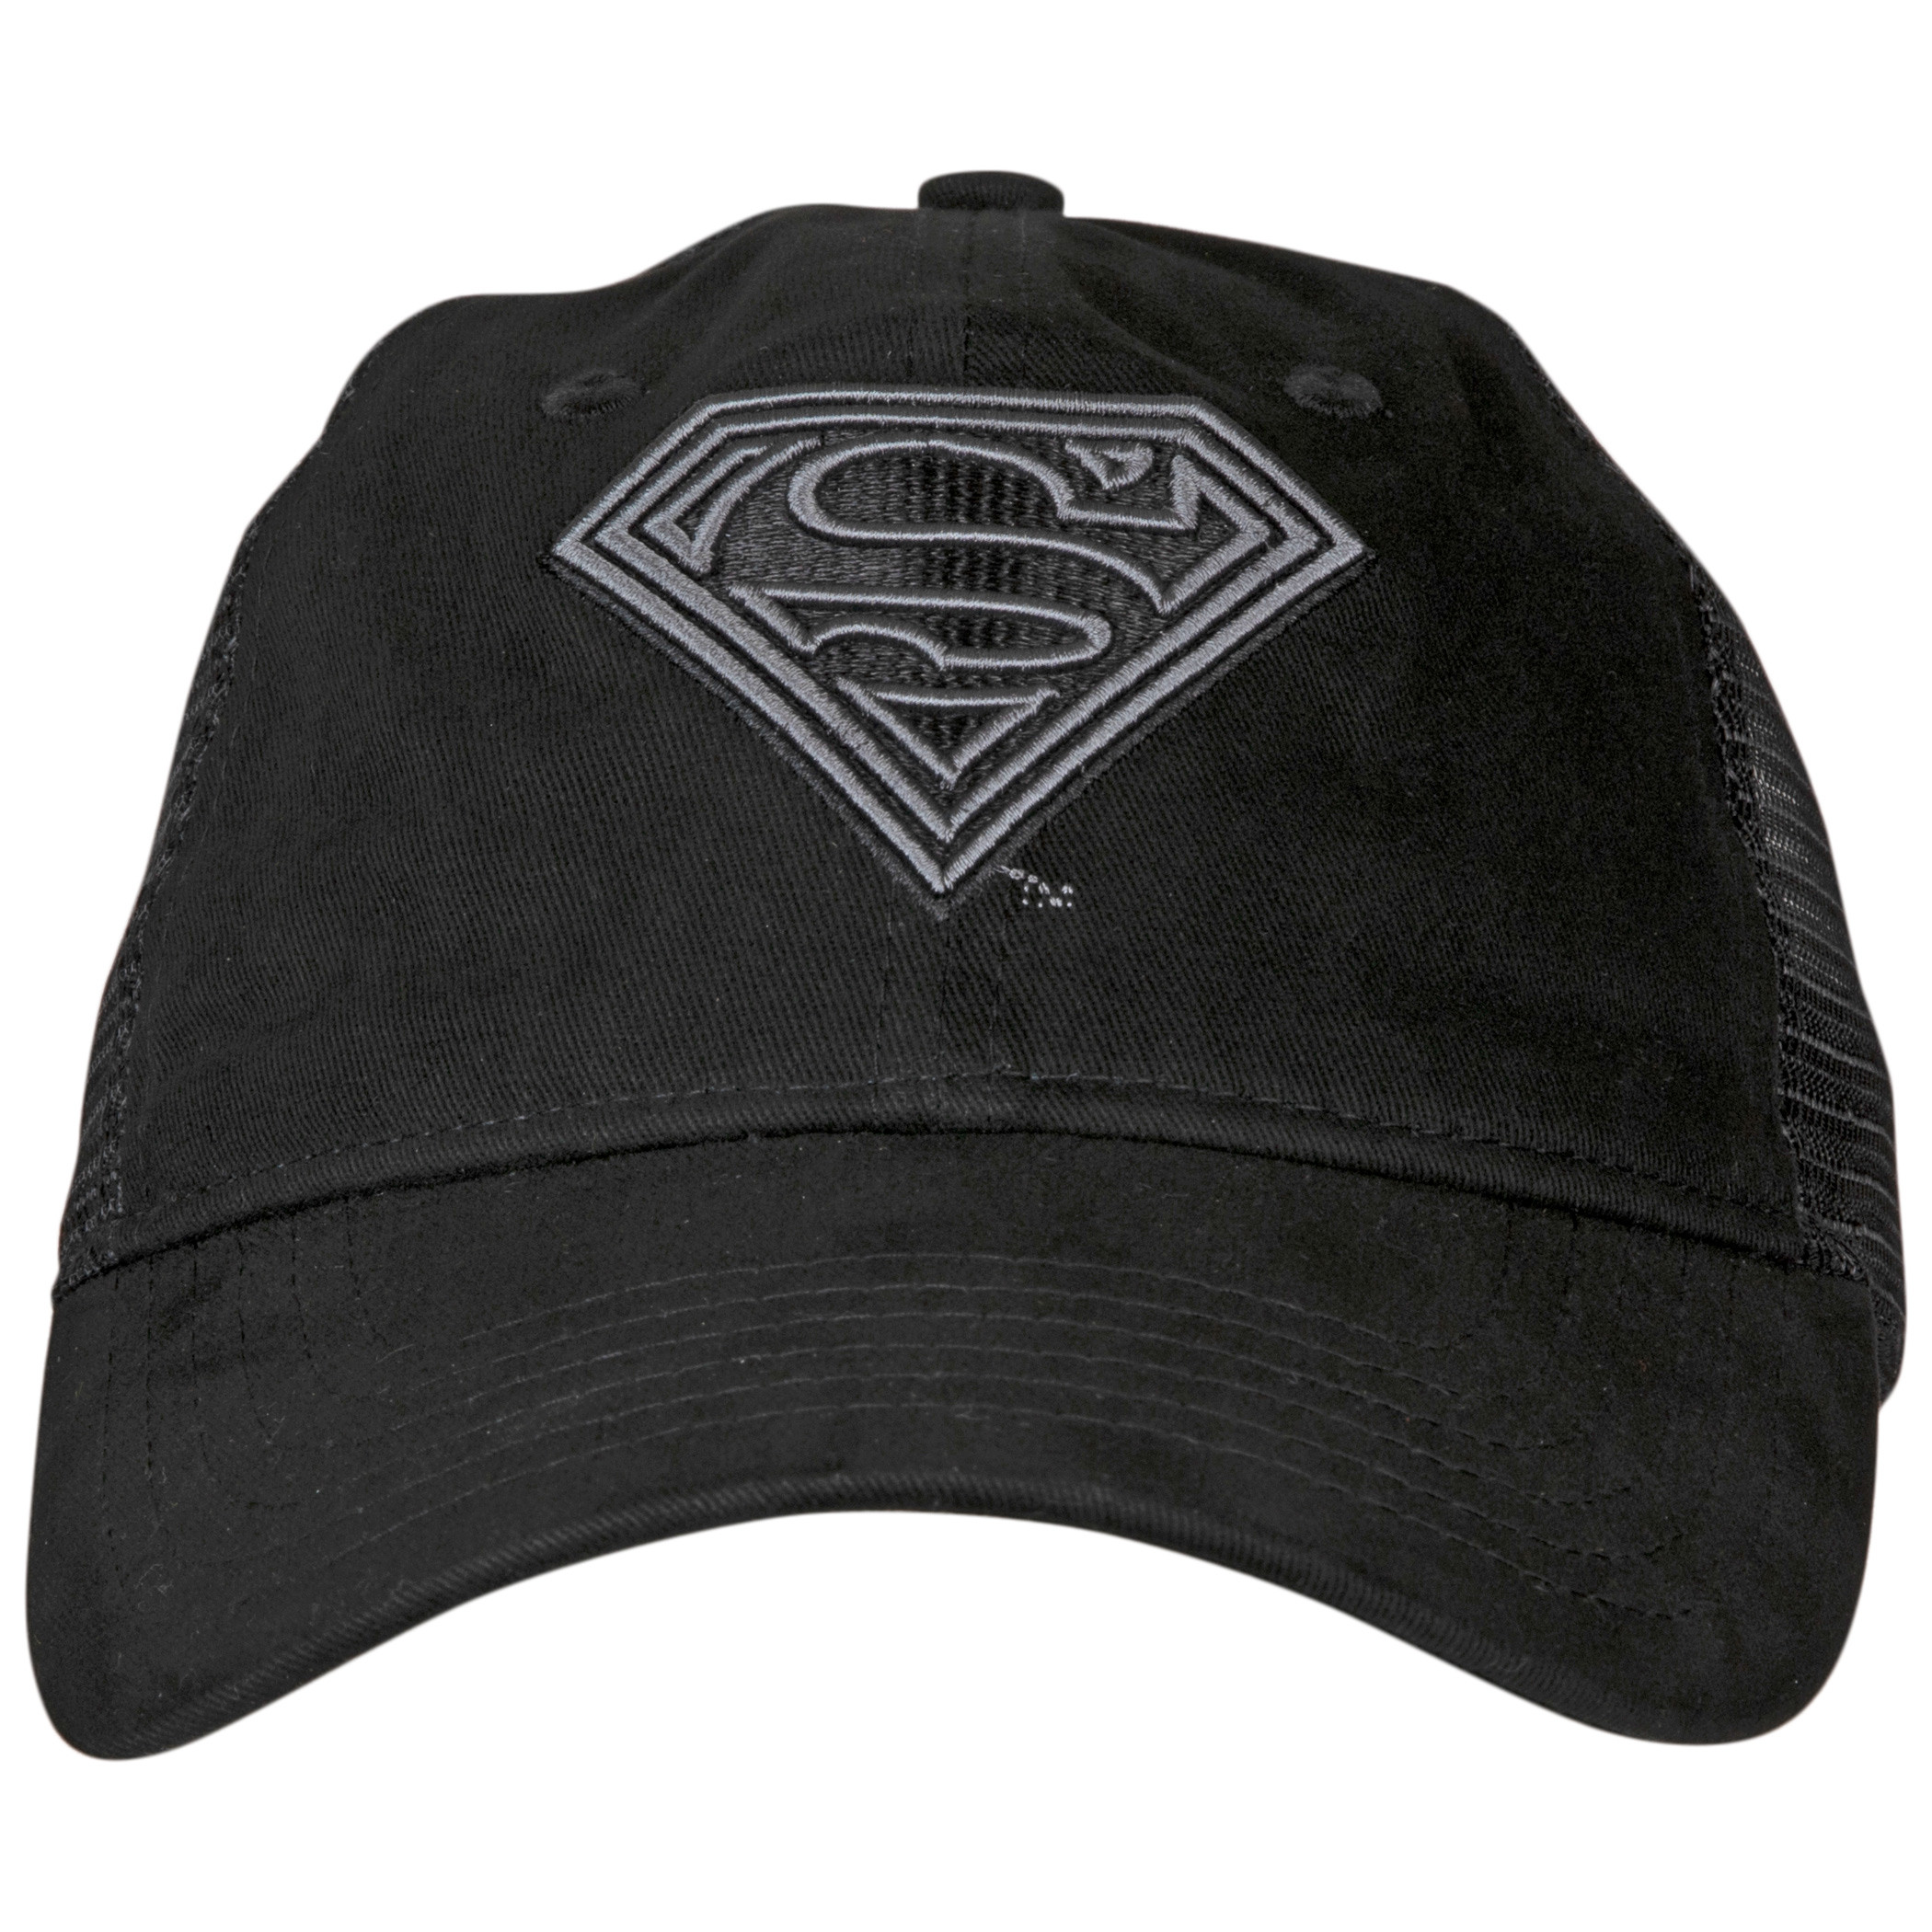 Superman Classic Symbol Black on Black Curved Brim Adjustable Dad Hat